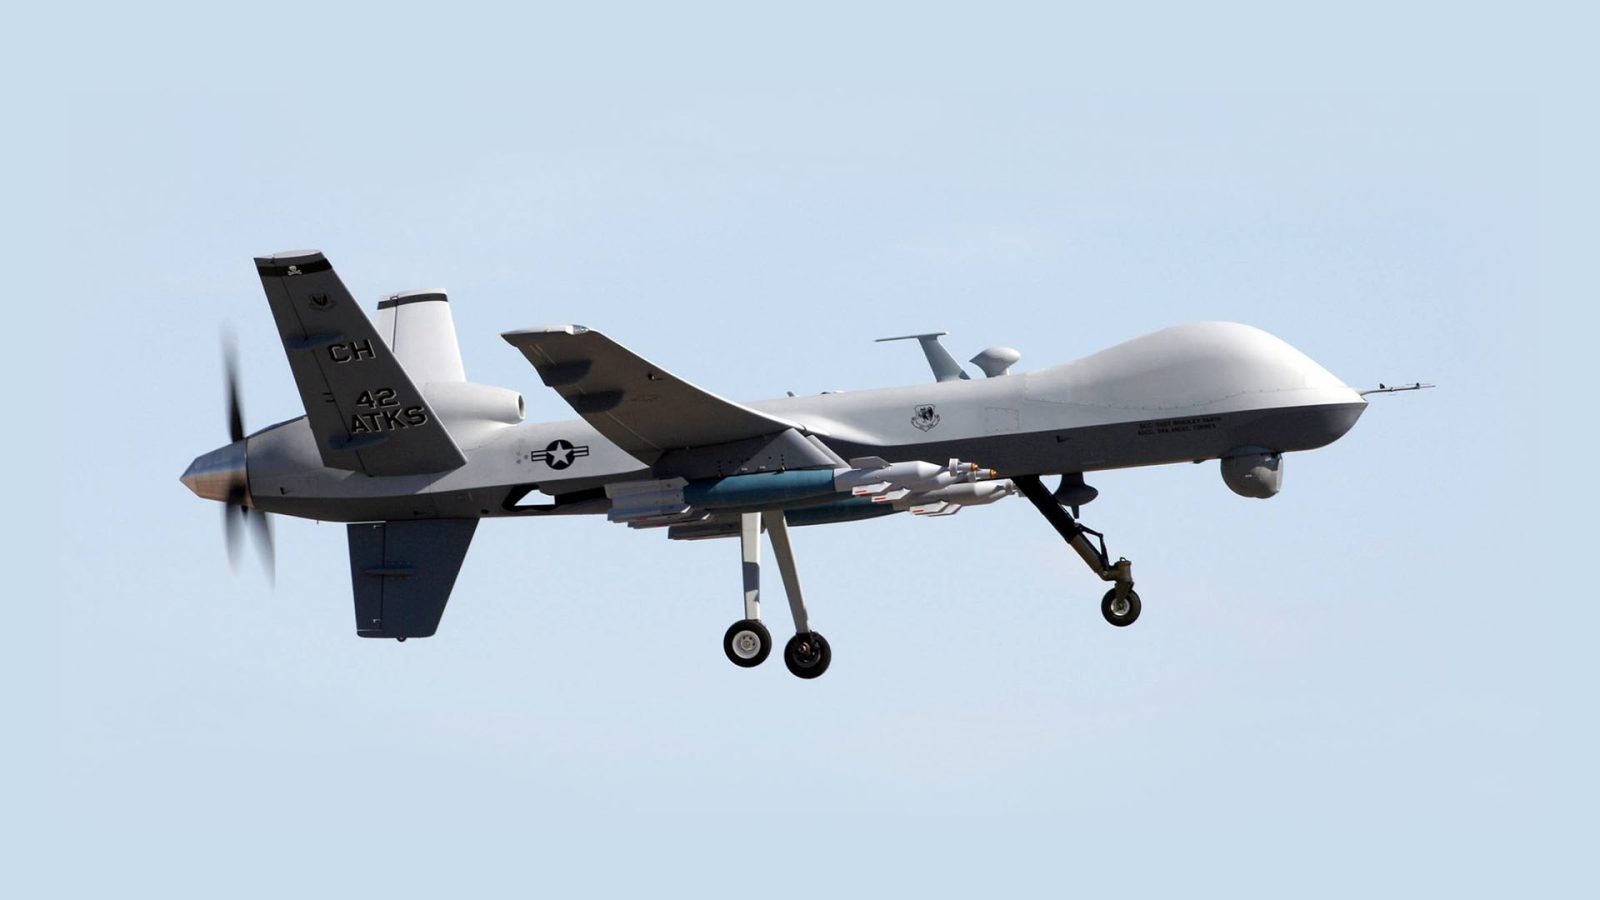 Will dog fighting drones dominate the skies in future combat scenarios?